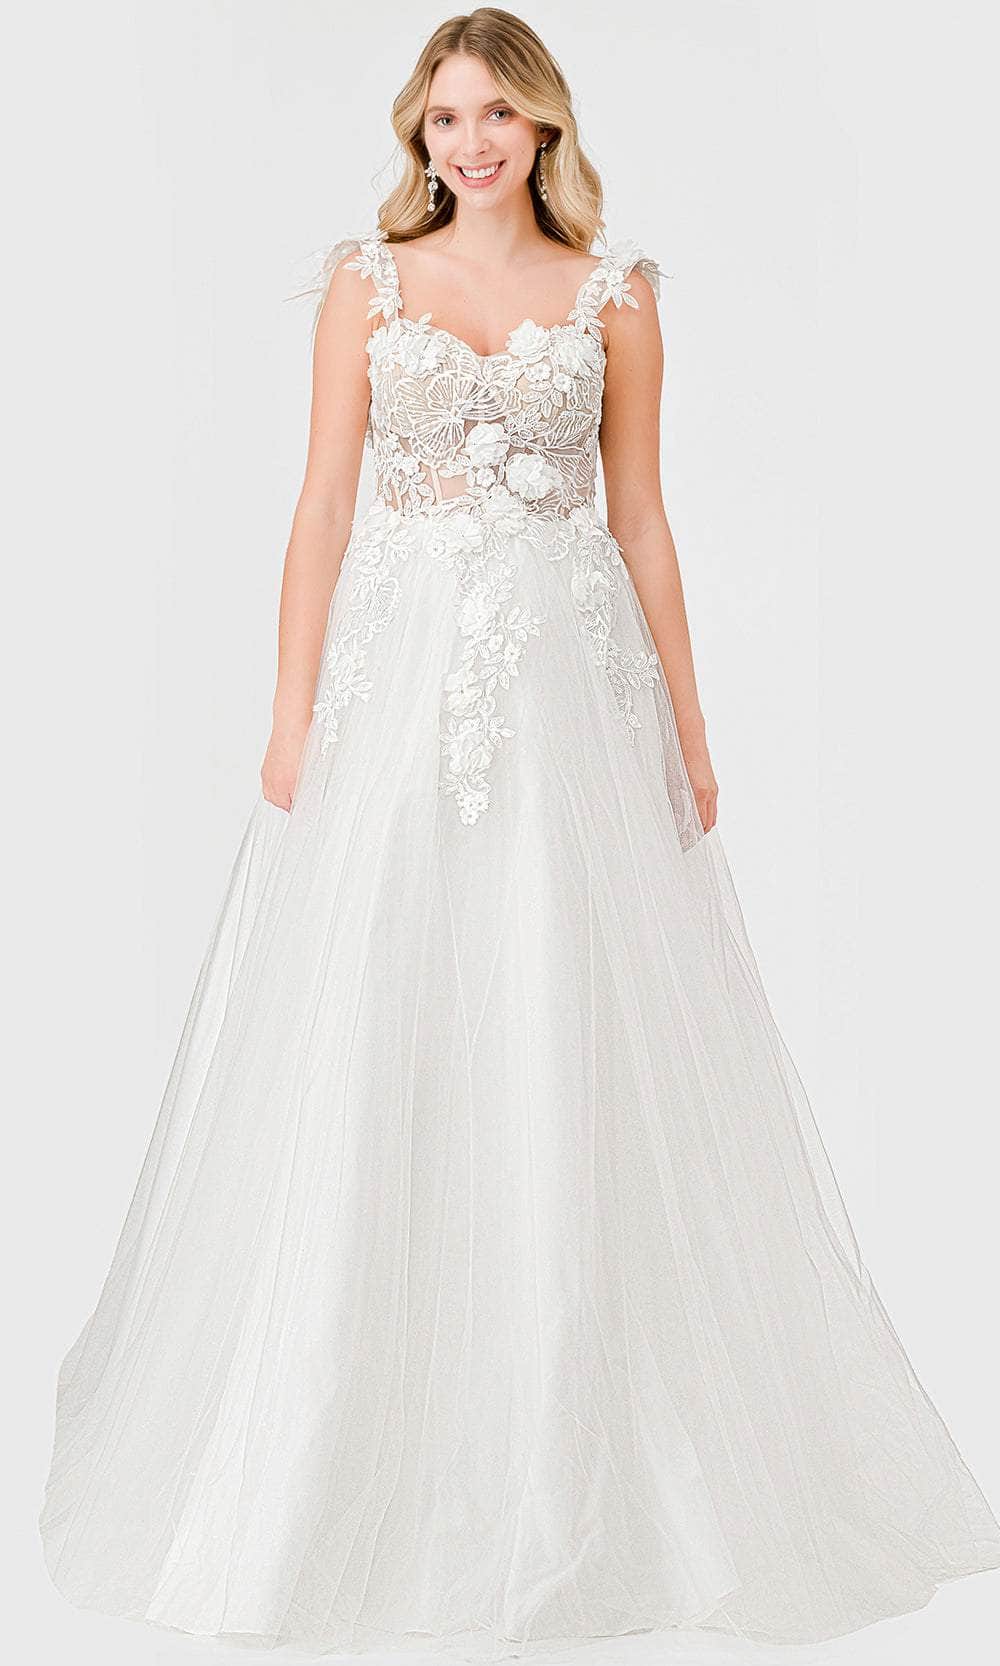 Image of Aspeed Design MS0026 - Floral Appliqued Sweetheart Bridal Dress